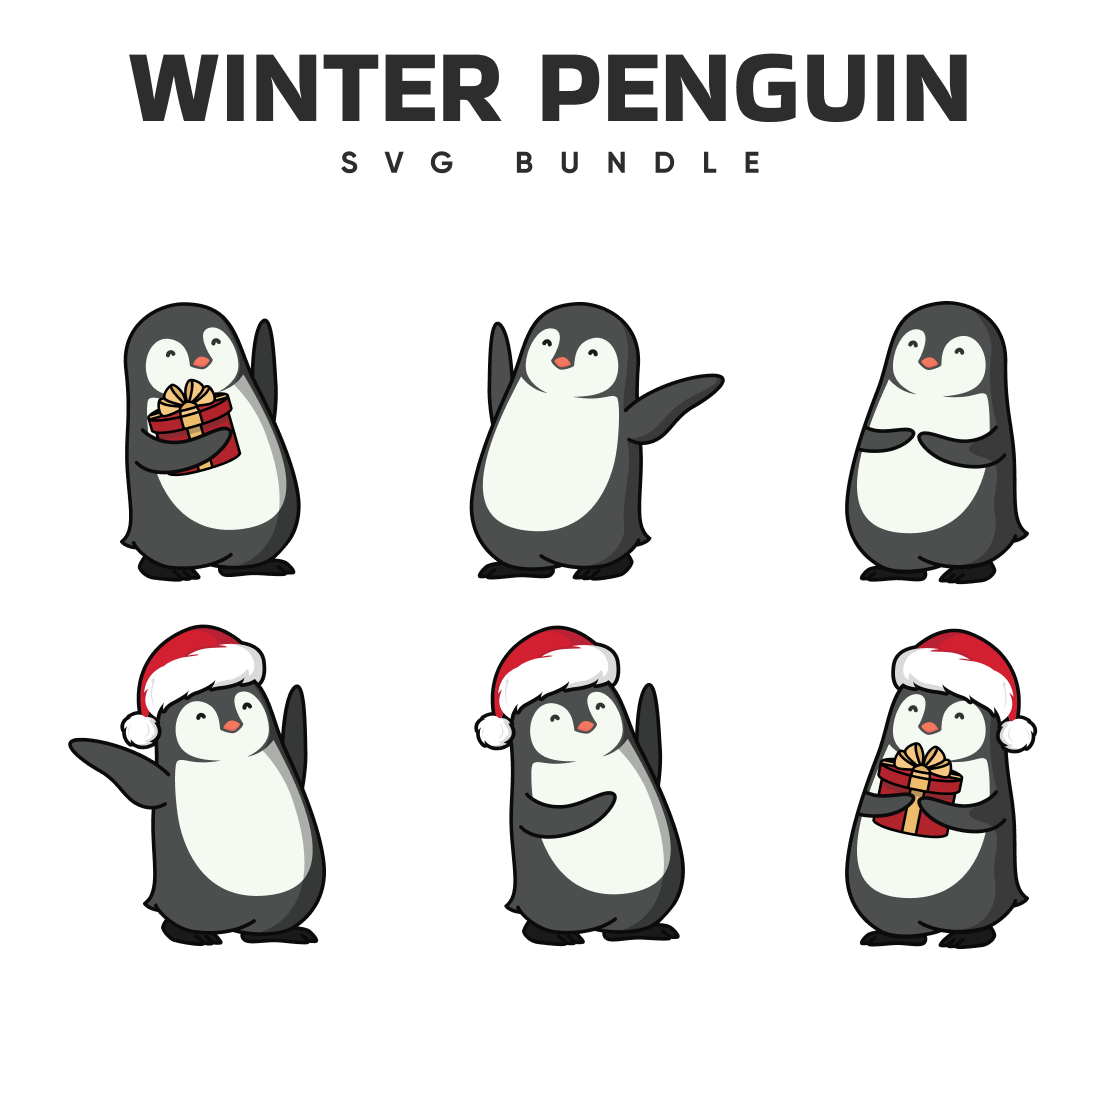 Winter Penguin SVG Bundle.